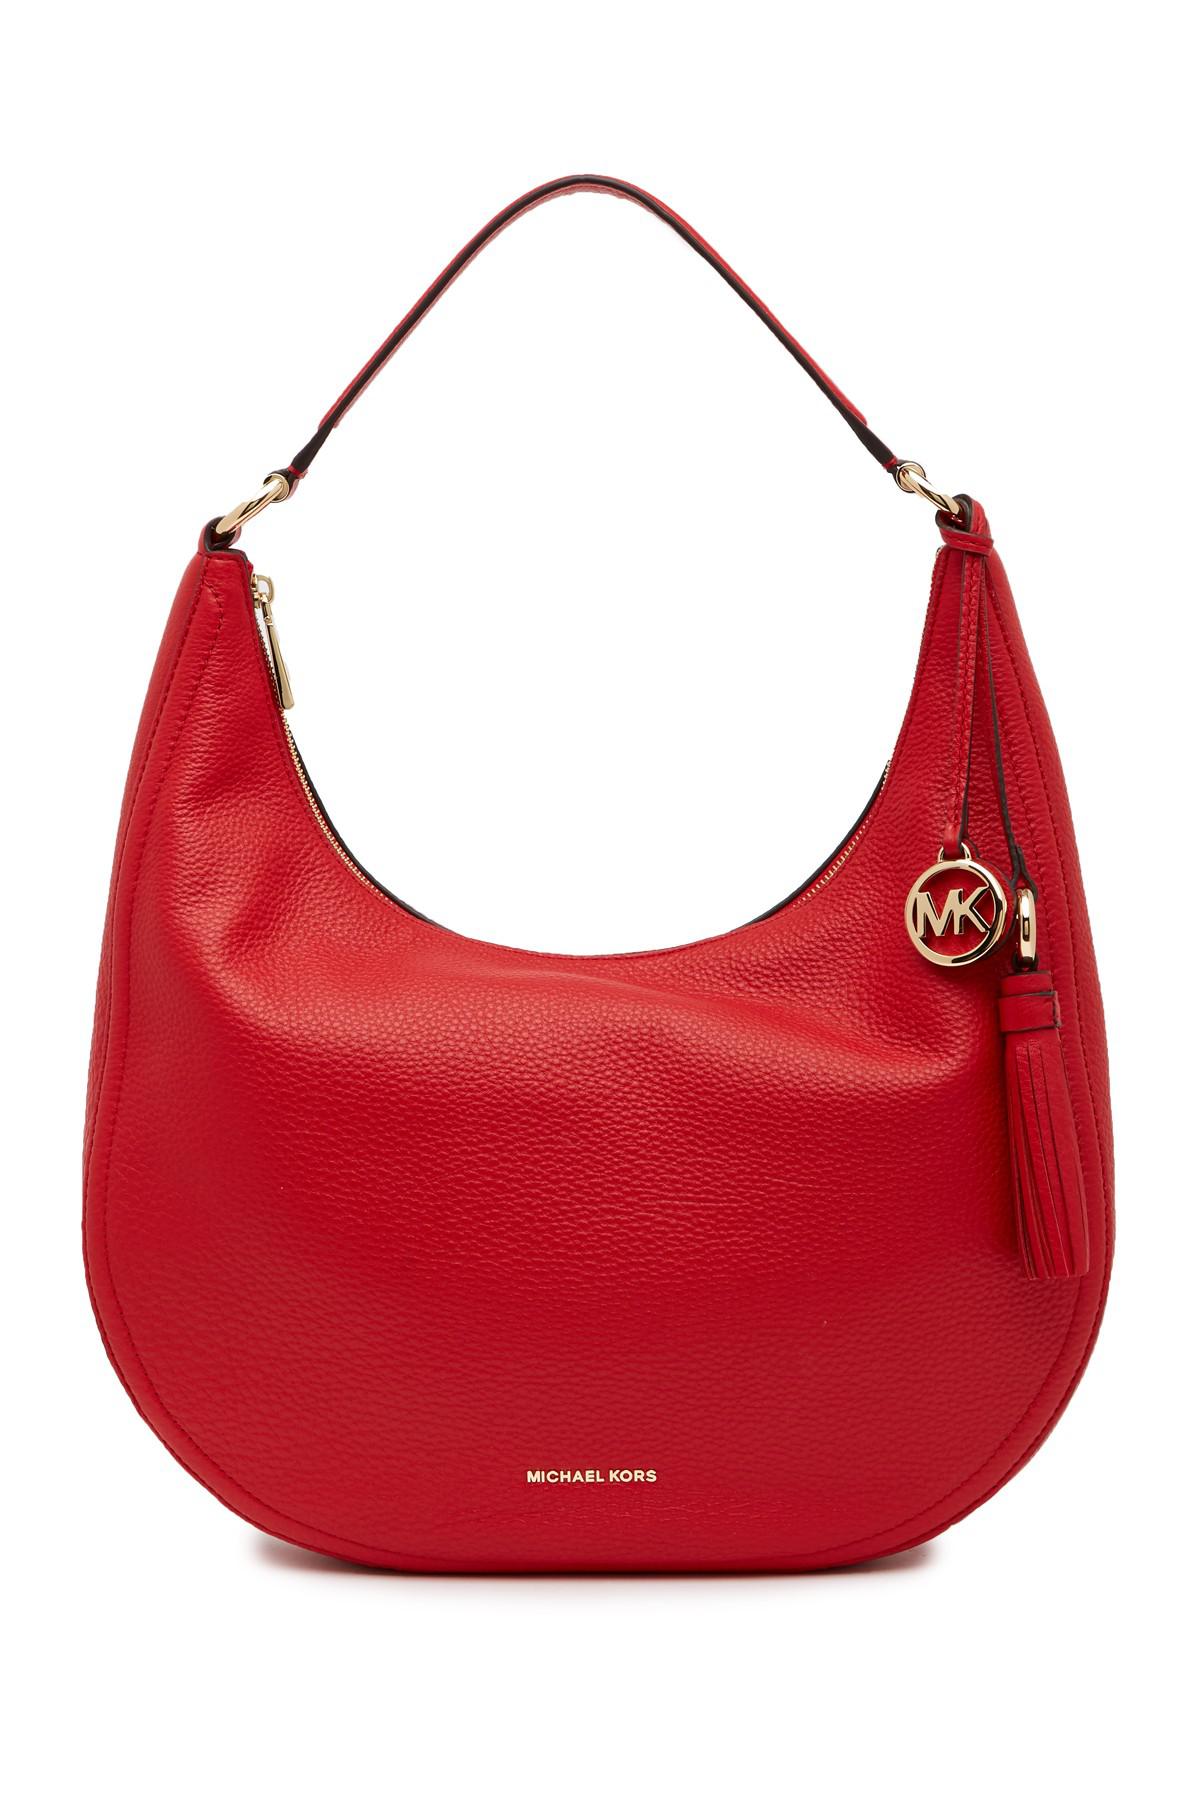 Kate Spade Zippy Pebbled Leather Shoulder Bag (Red Curran): Handbags:  Amazon.com